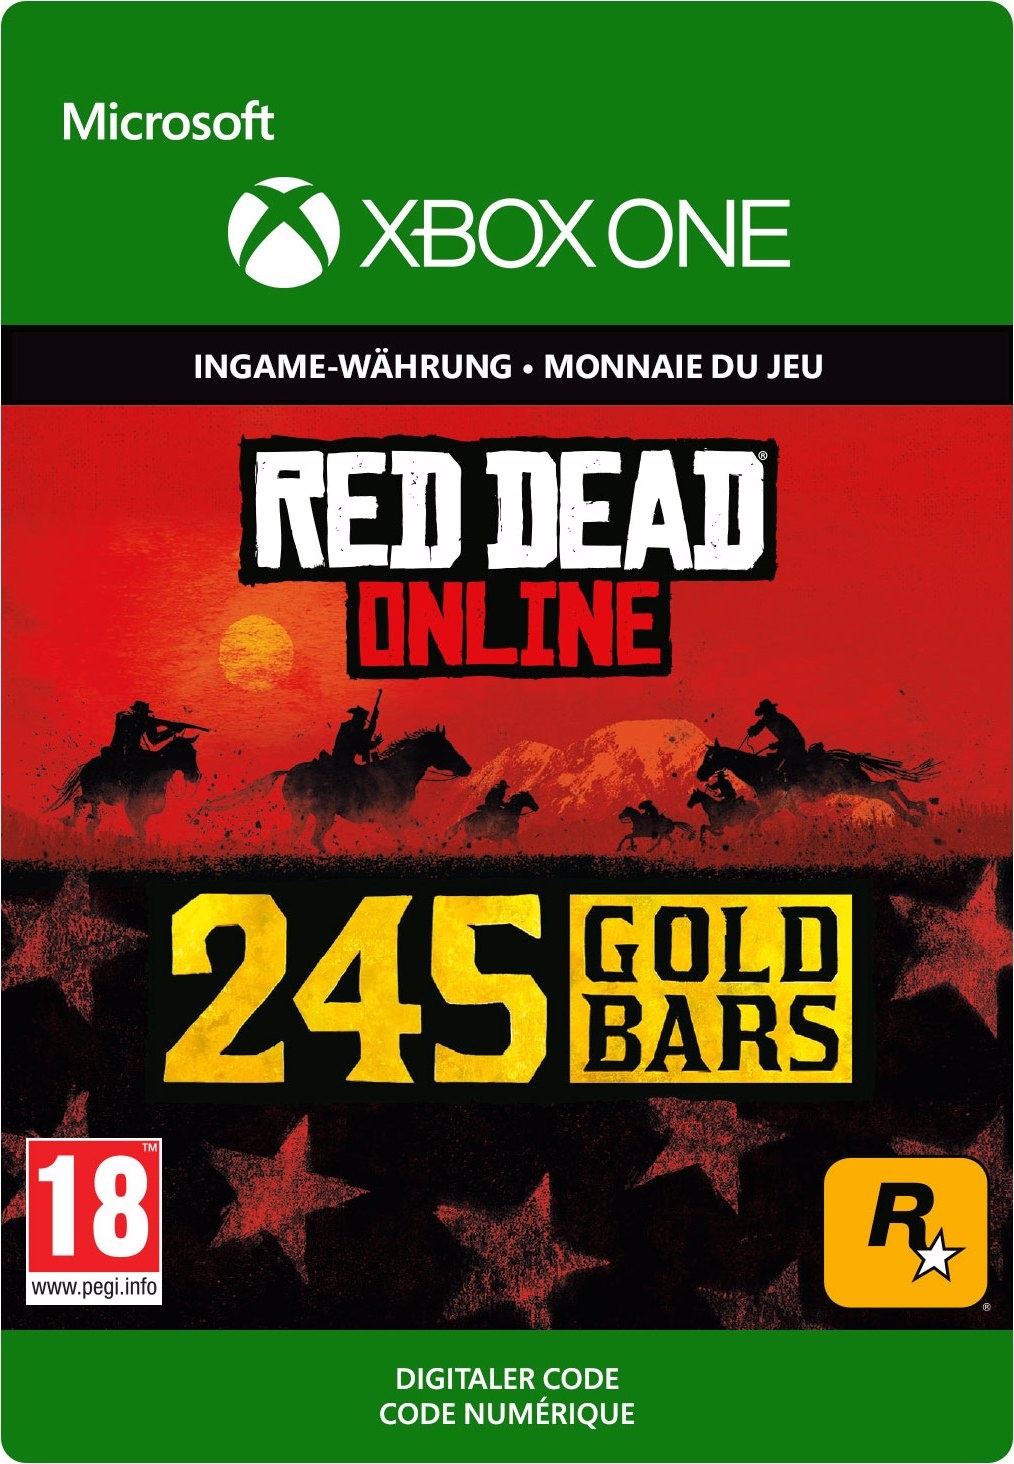 Microsoft Red Dead Redemption 2: 245 Gold Bars, Ingame Währung